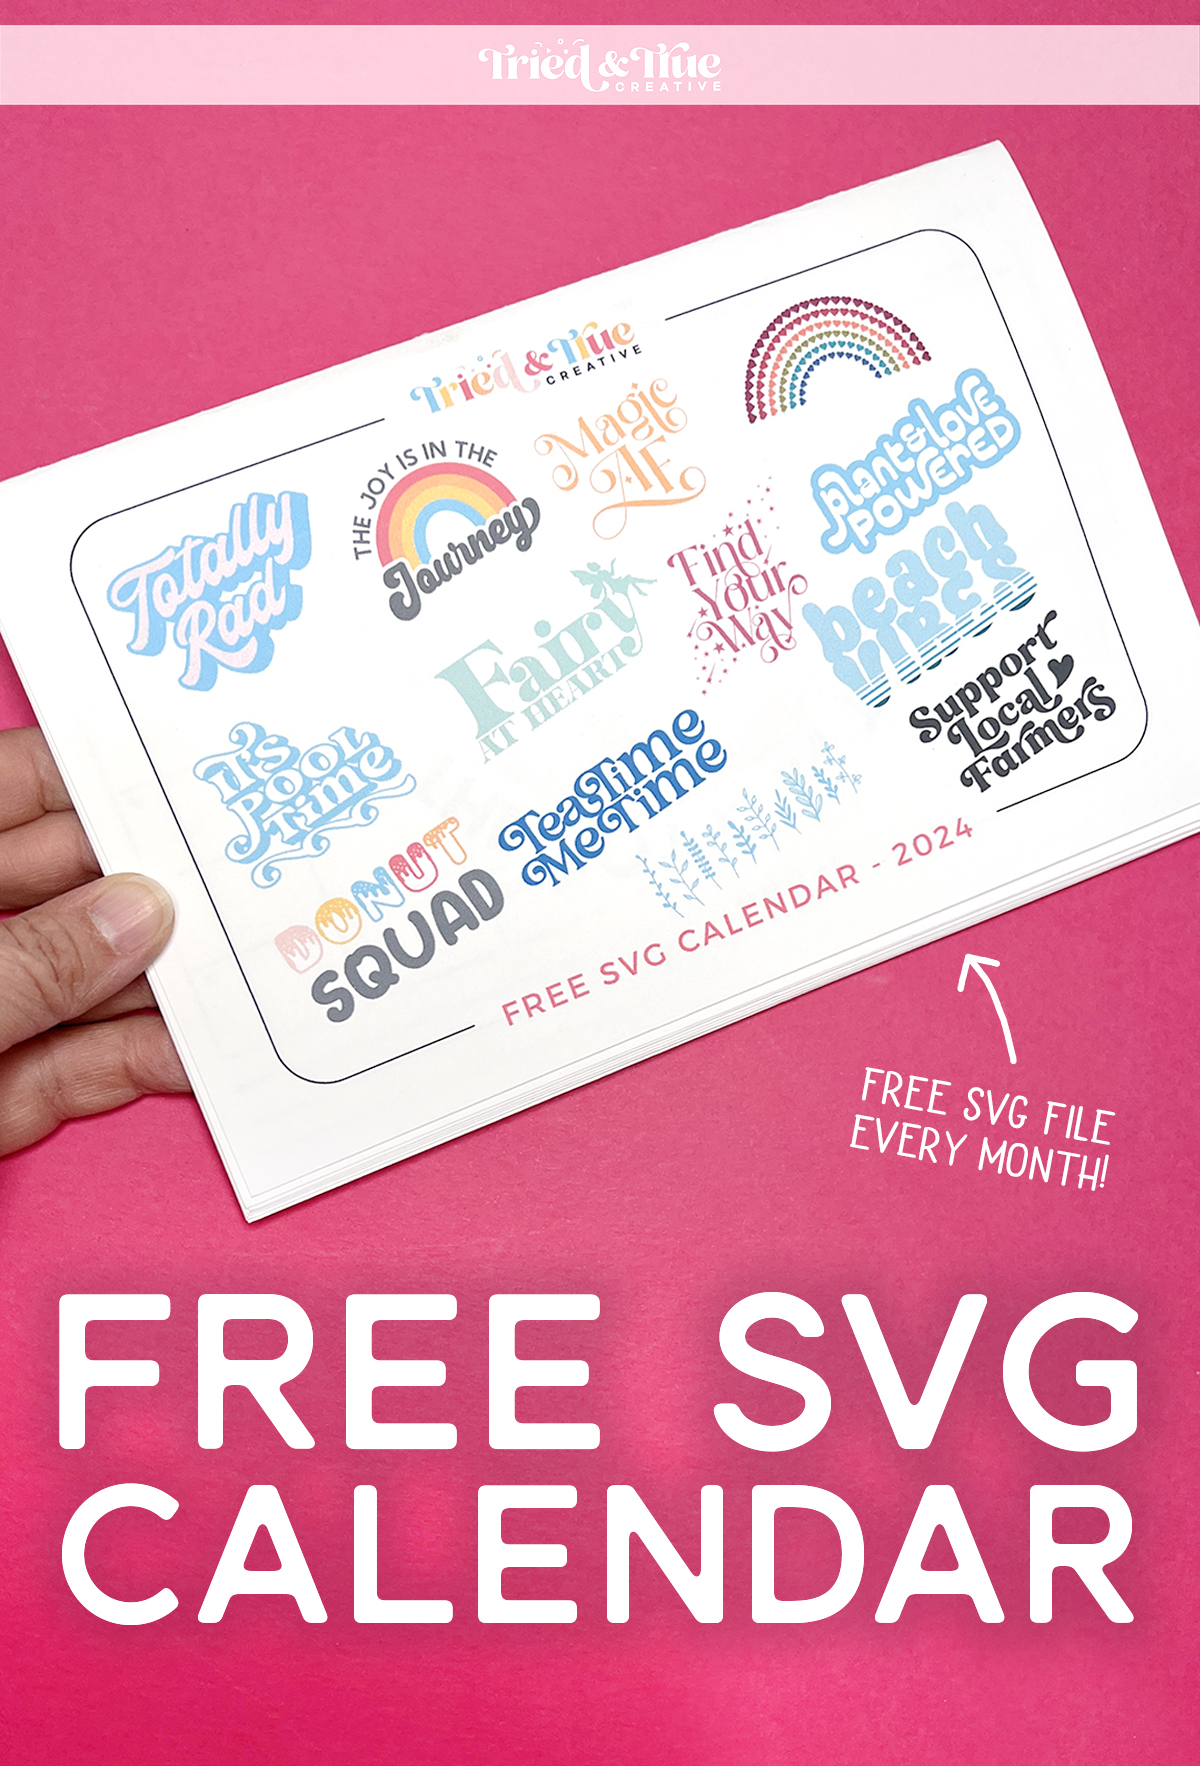 Free SVG calendar file.